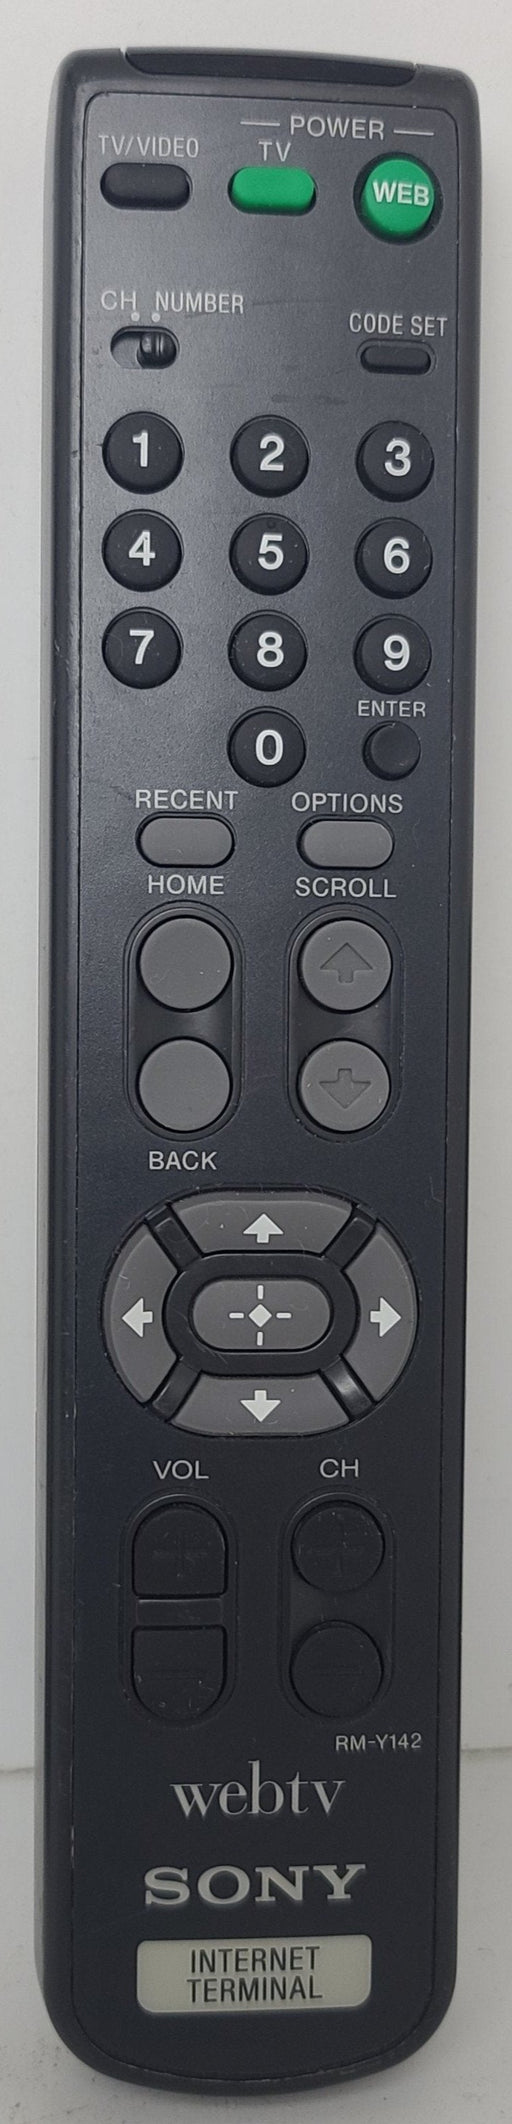 Sony RM-Y142 WebTV Internet Terminal Remote Control-Remote-SpenCertified-refurbished-vintage-electonics